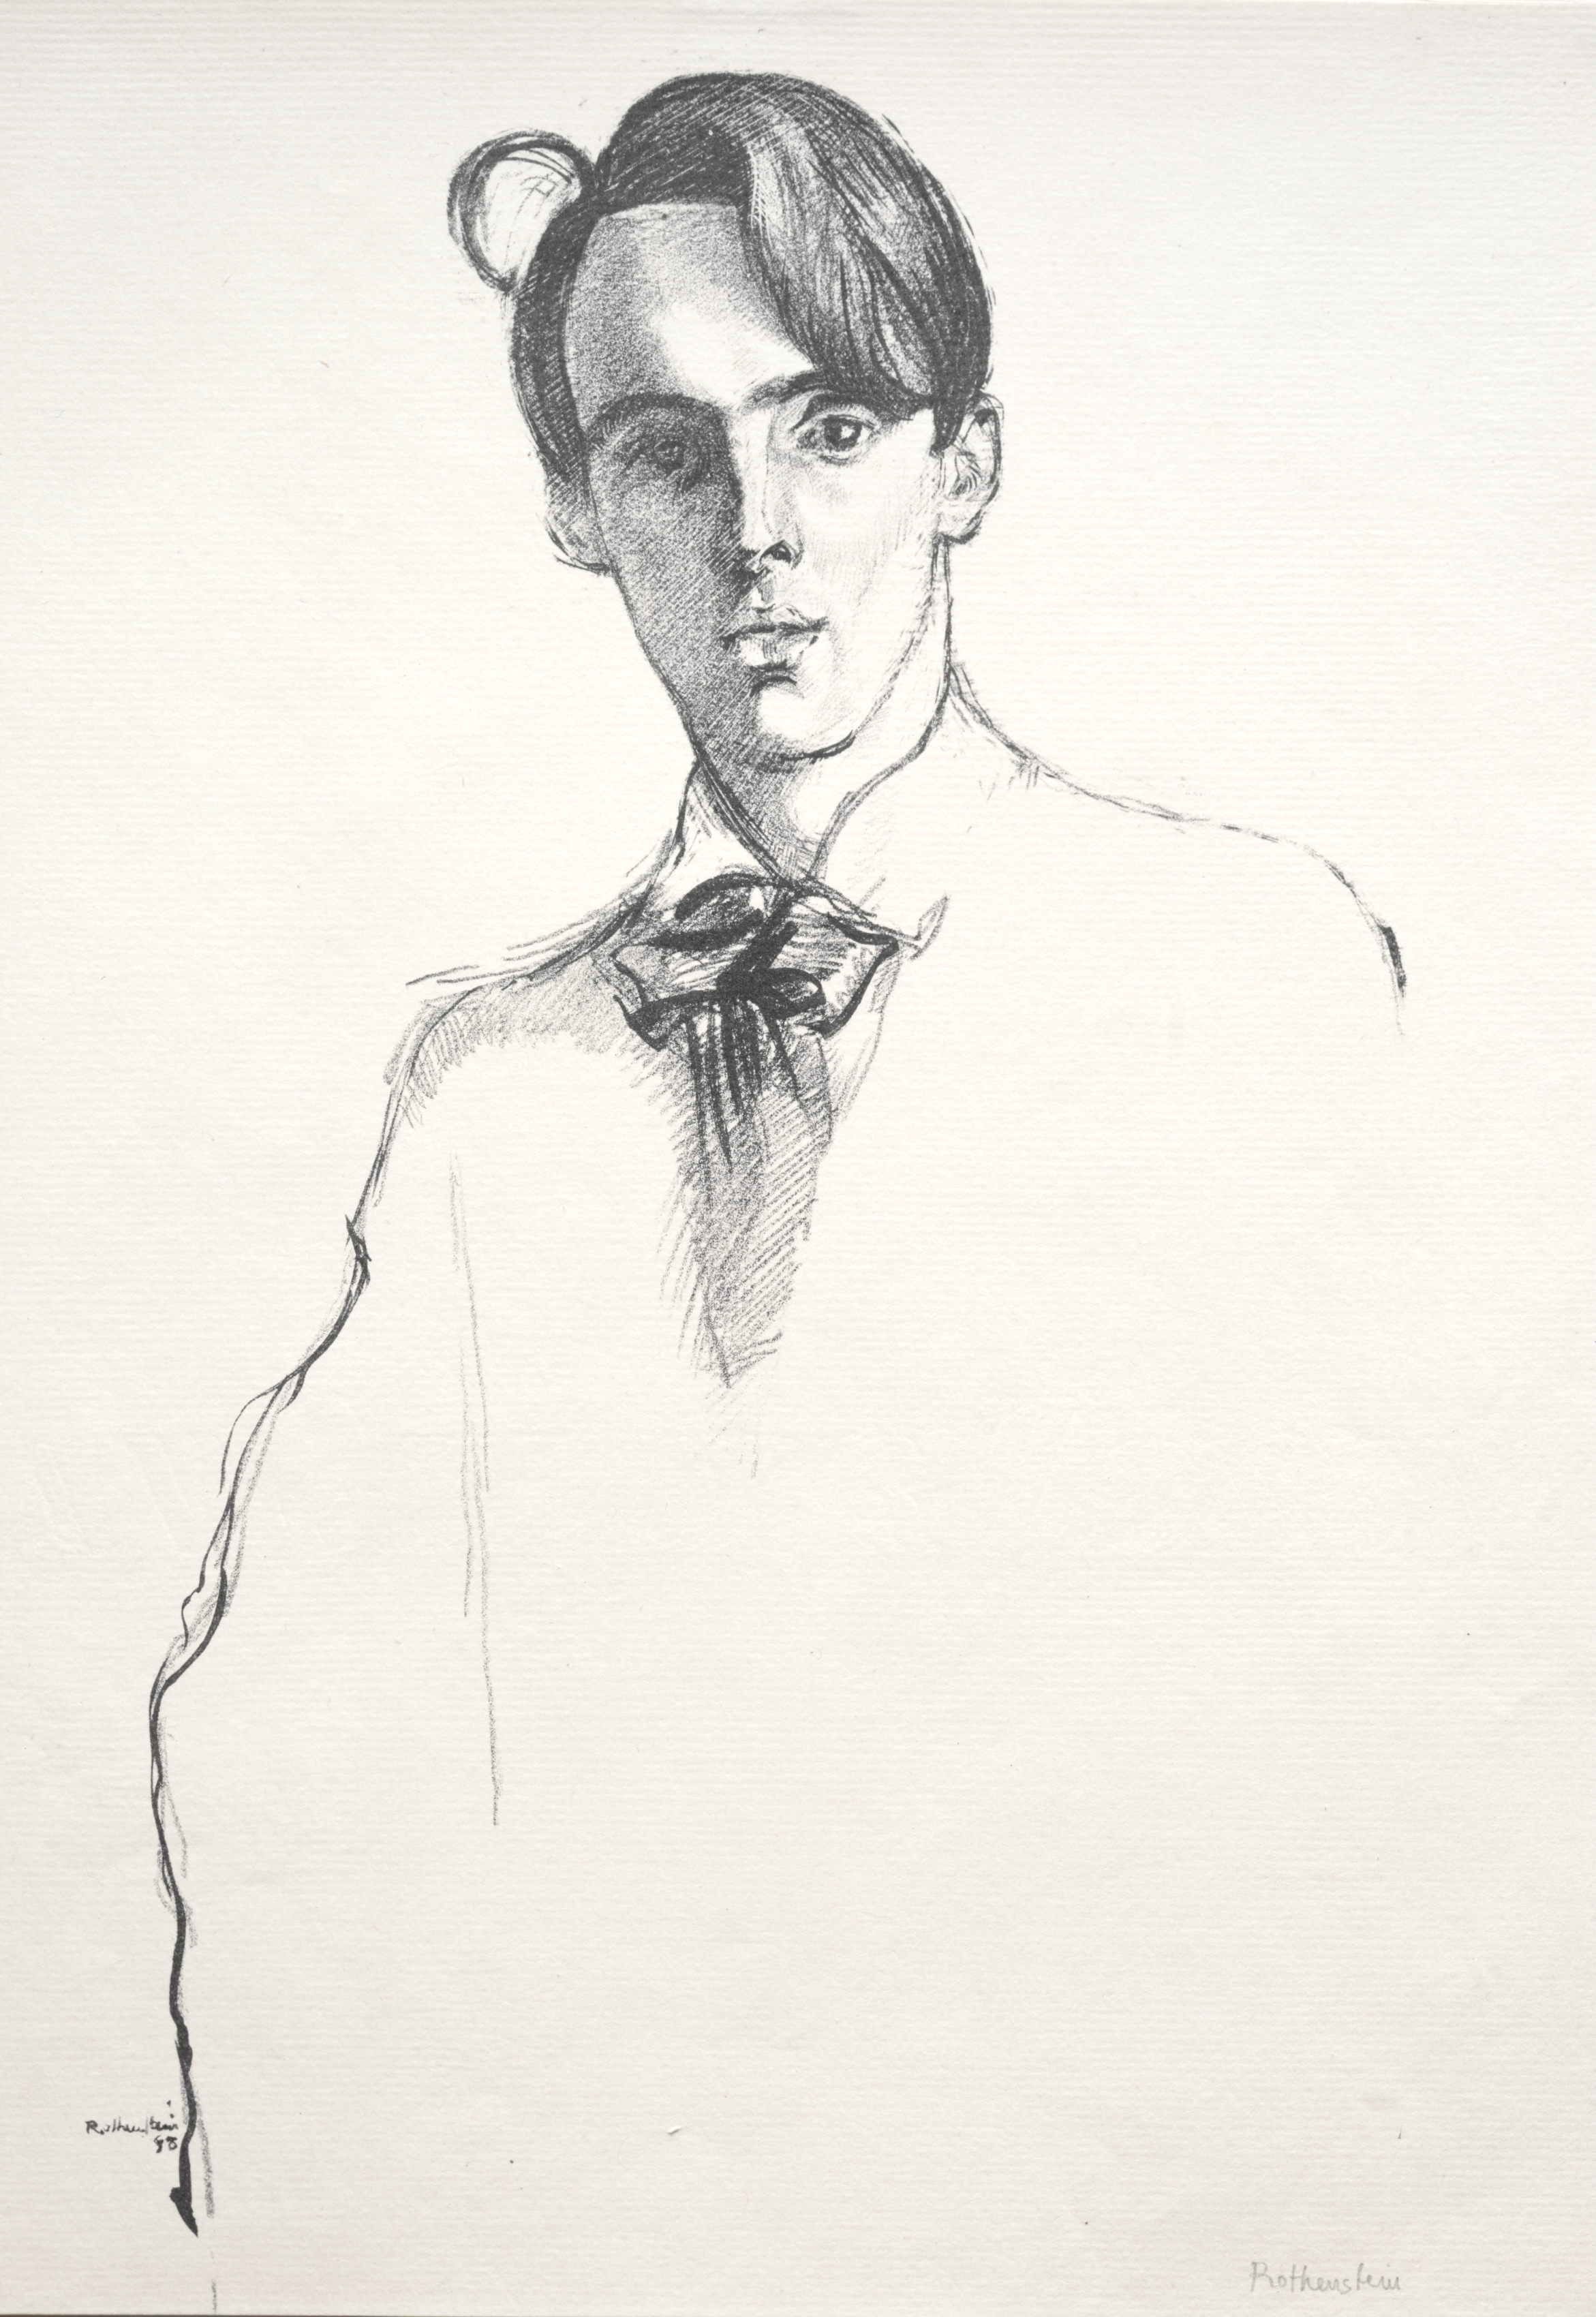 William Butler Yeats